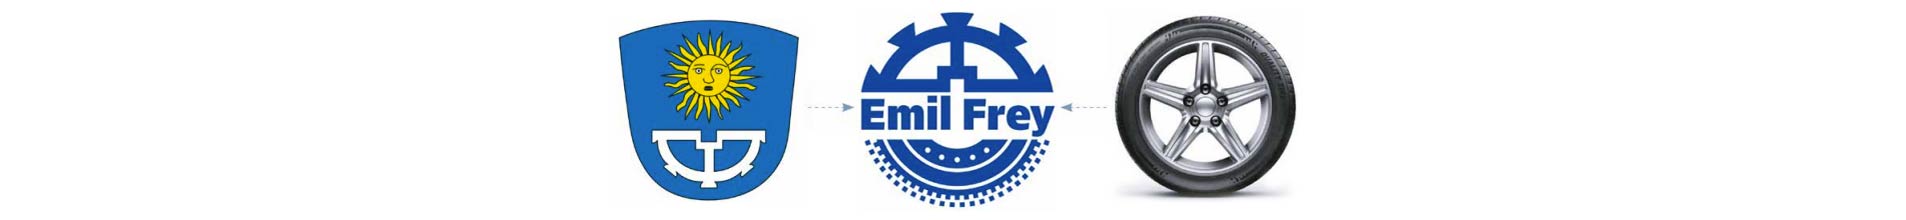 Historie a význam loga Emil Frey